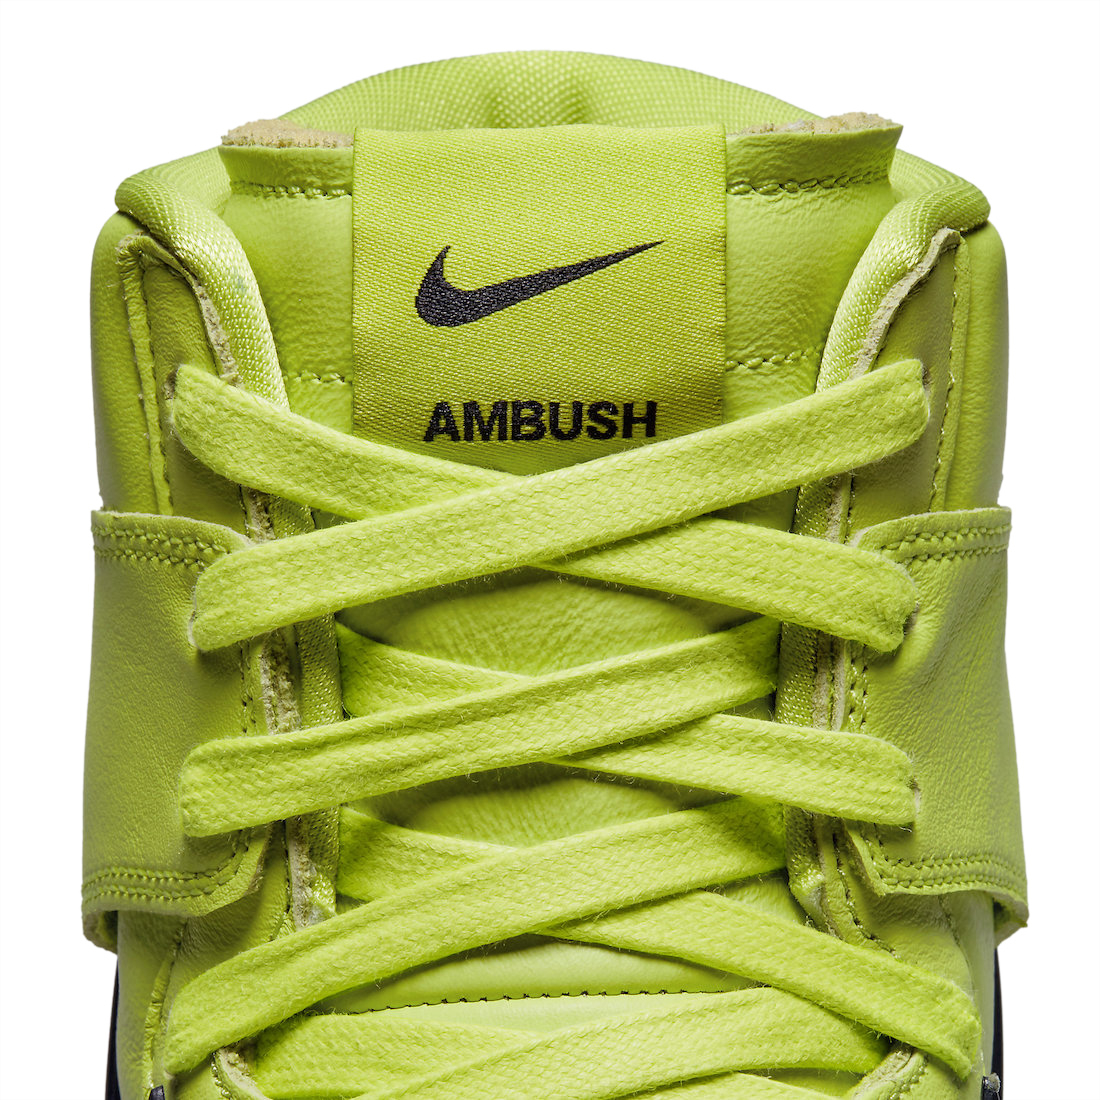 BUY AMBUSH X Nike Dunk High Flash Lime | Kixify Marketplace